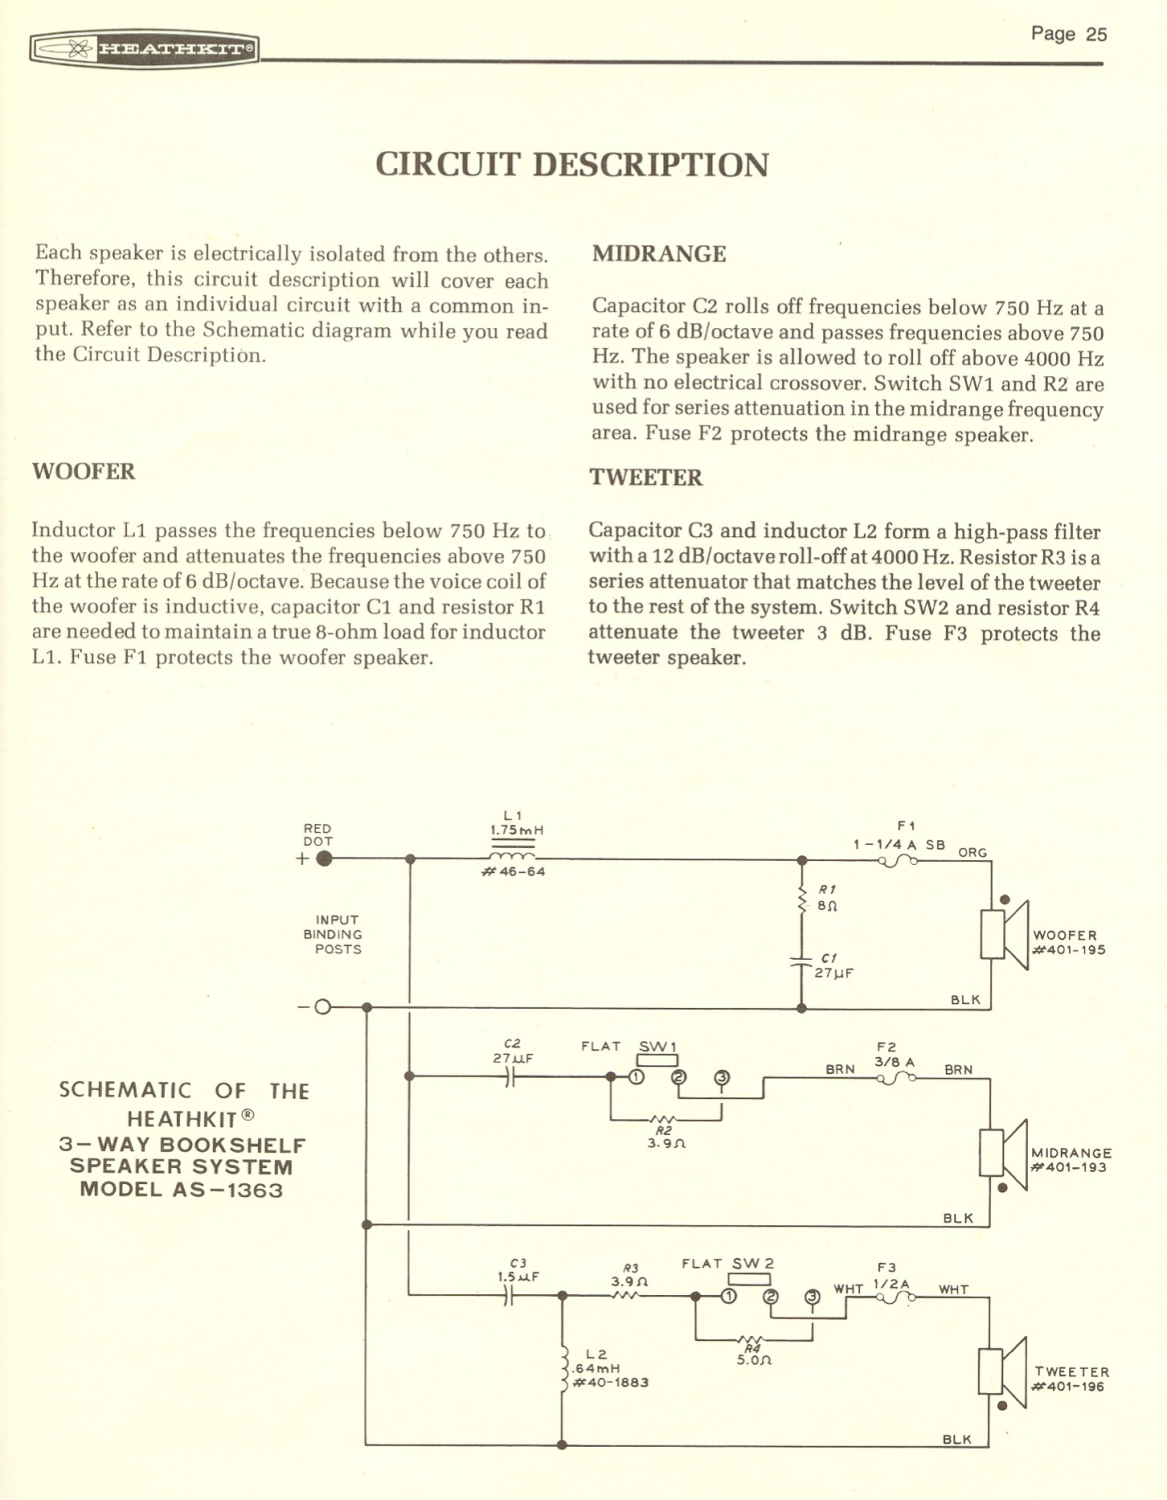 Heathkit AS-1363 Compact HiFi Speaker System​ - Circuit Description